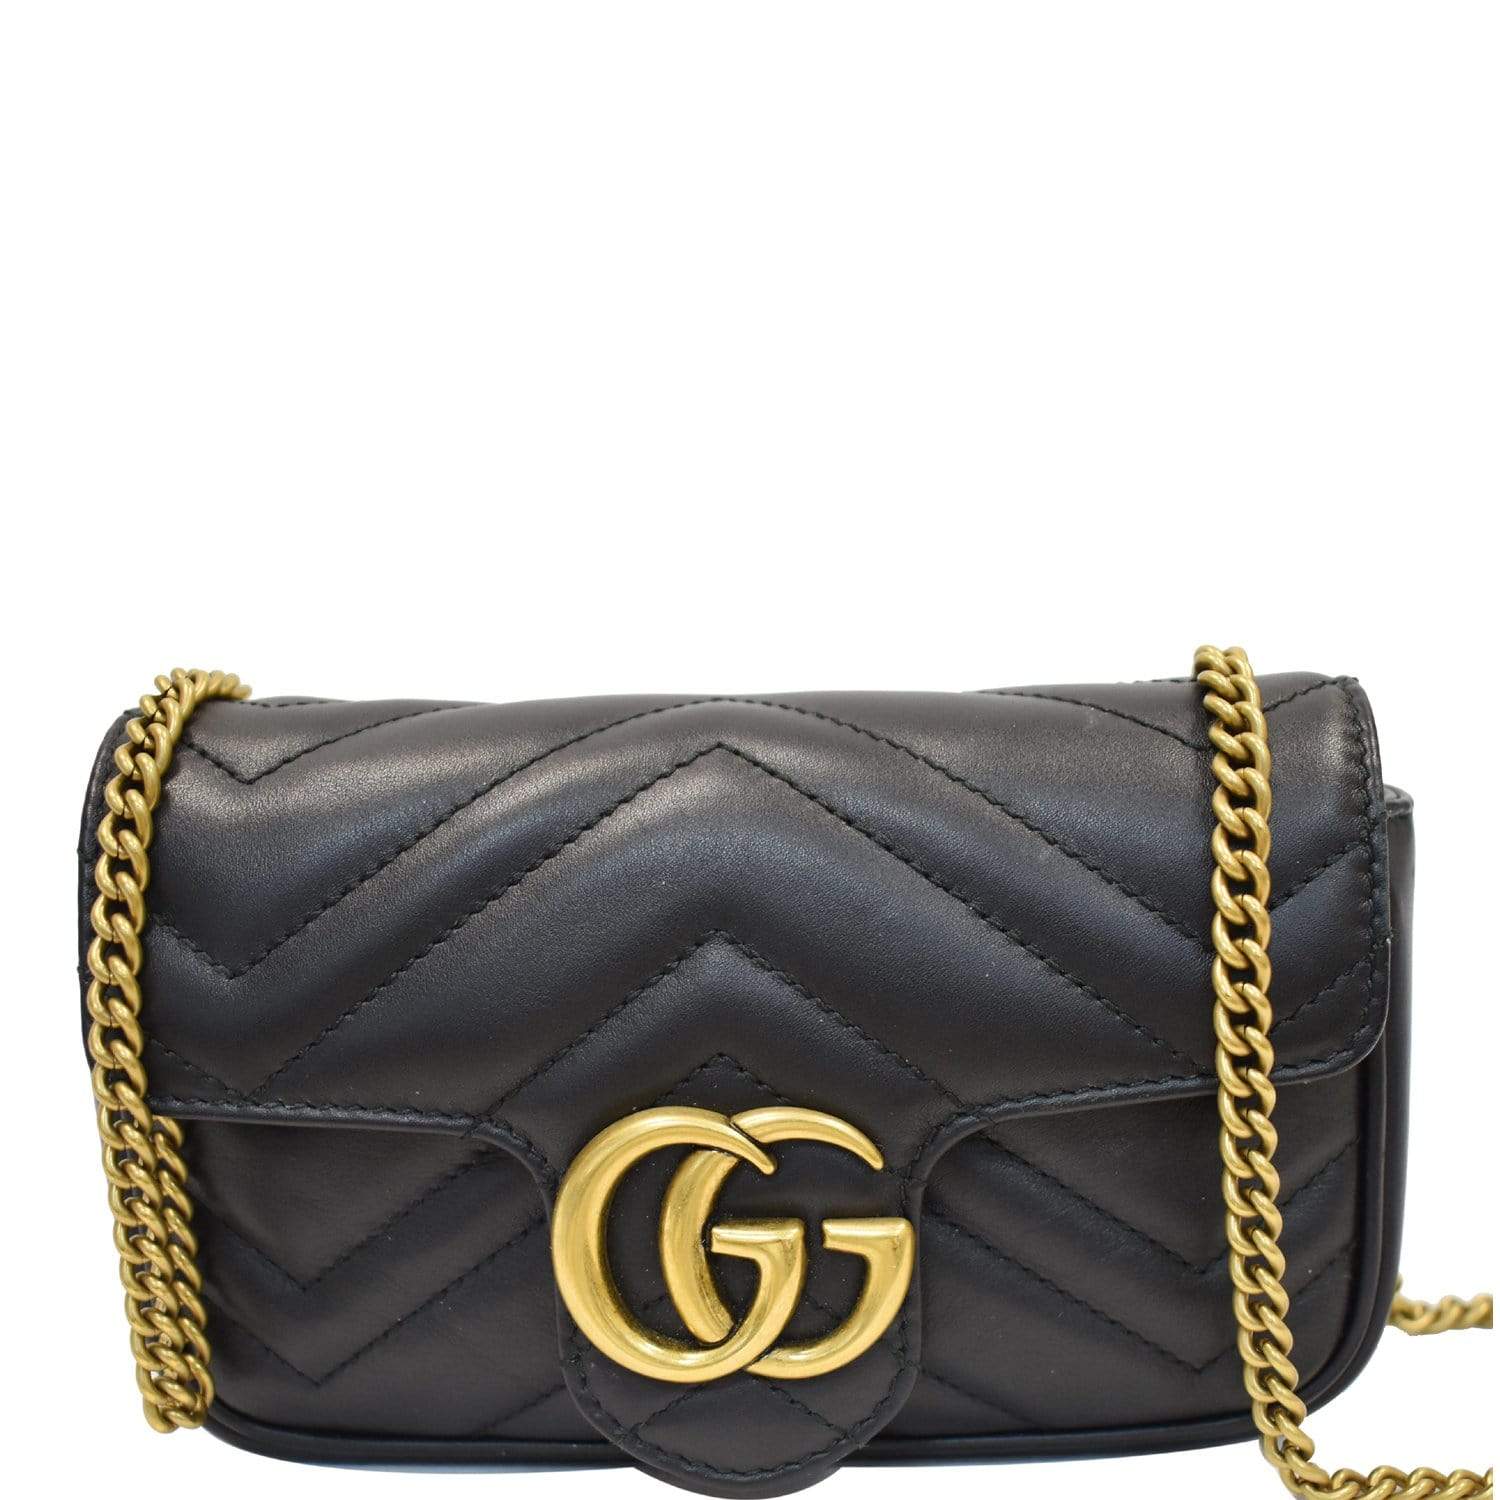 GG Marmont Mini Shoulder Bag in Black - Gucci